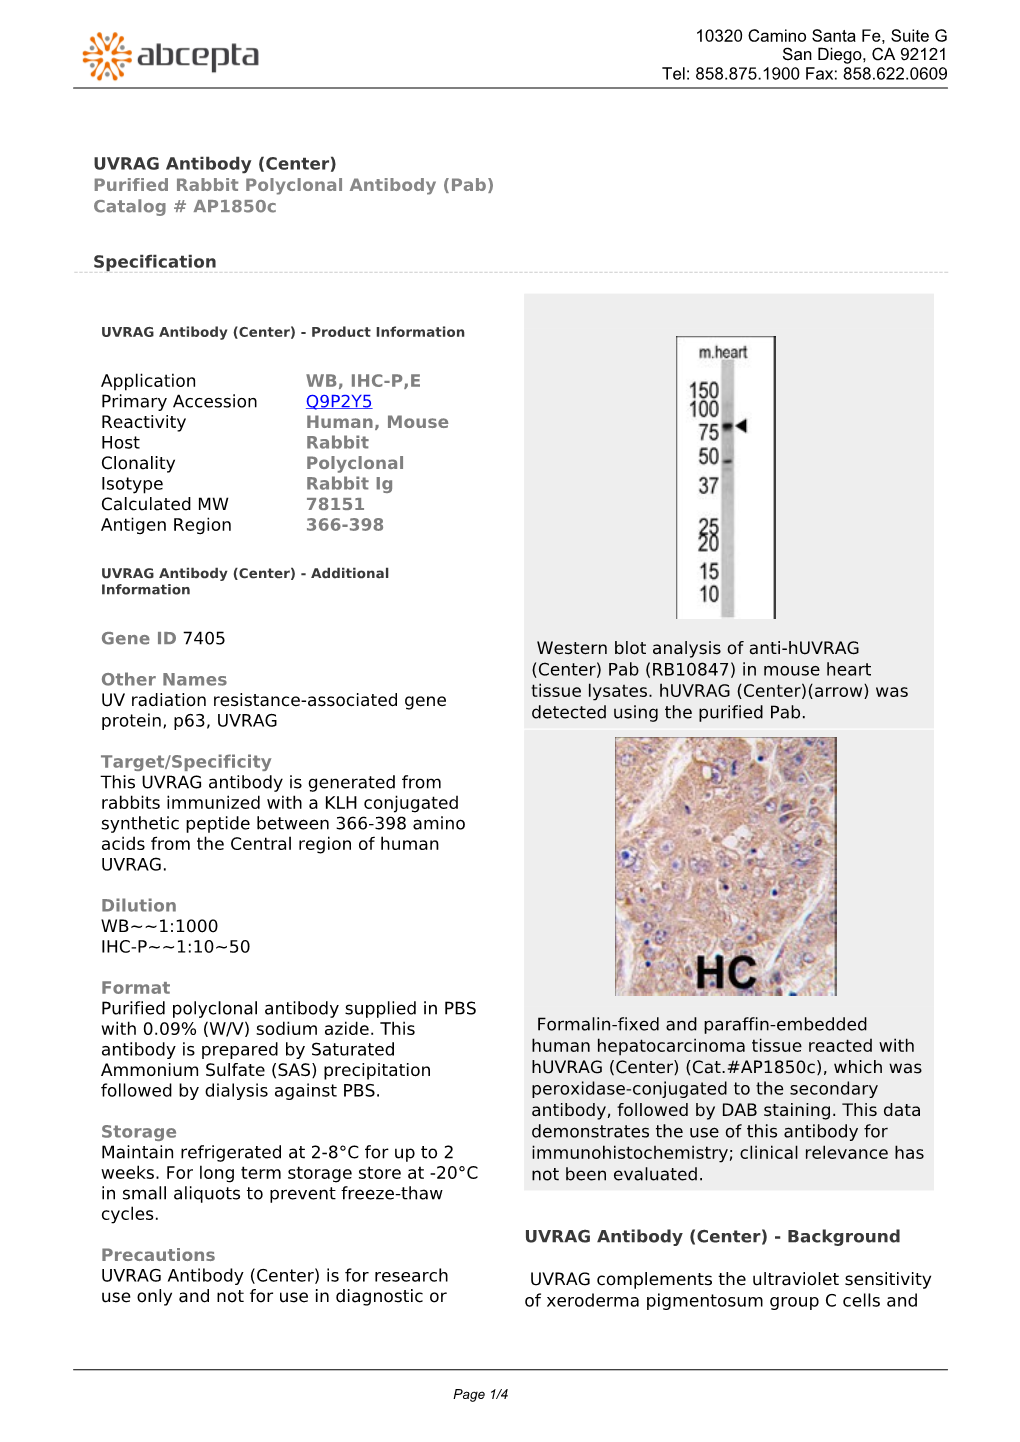 UVRAG Antibody (Center) Purified Rabbit Polyclonal Antibody (Pab) Catalog # Ap1850c